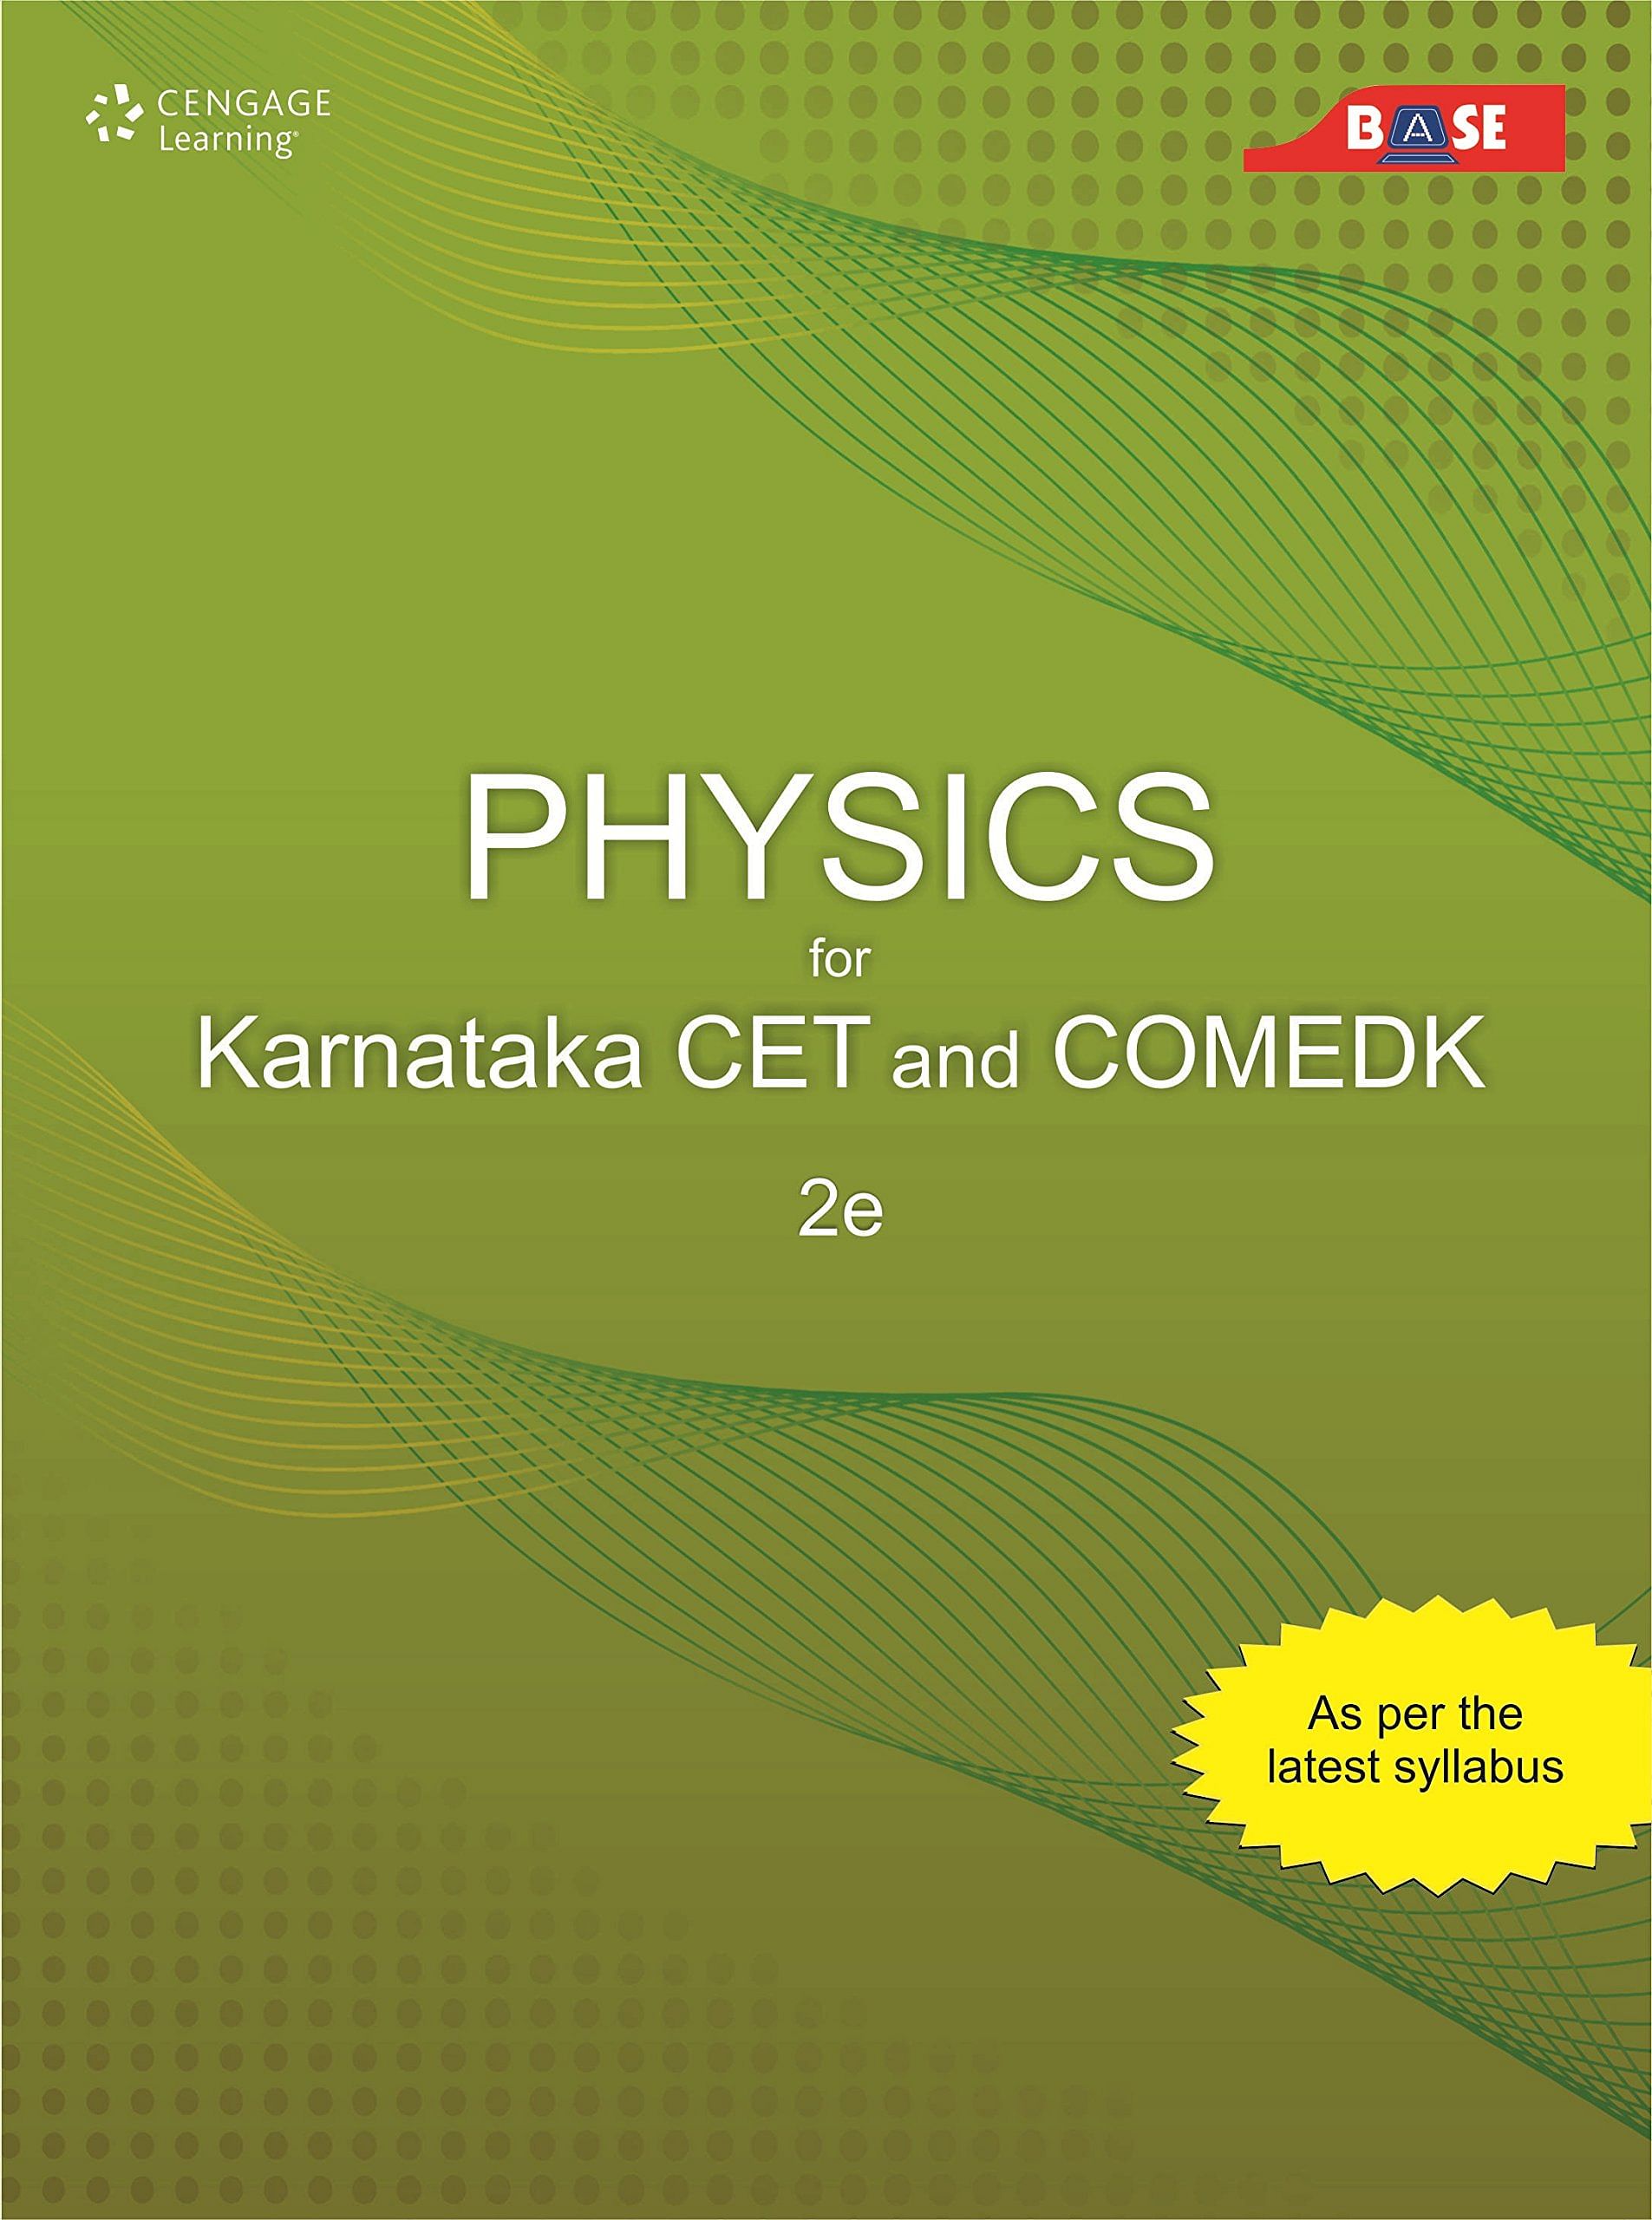 Karnataka CET Physics book